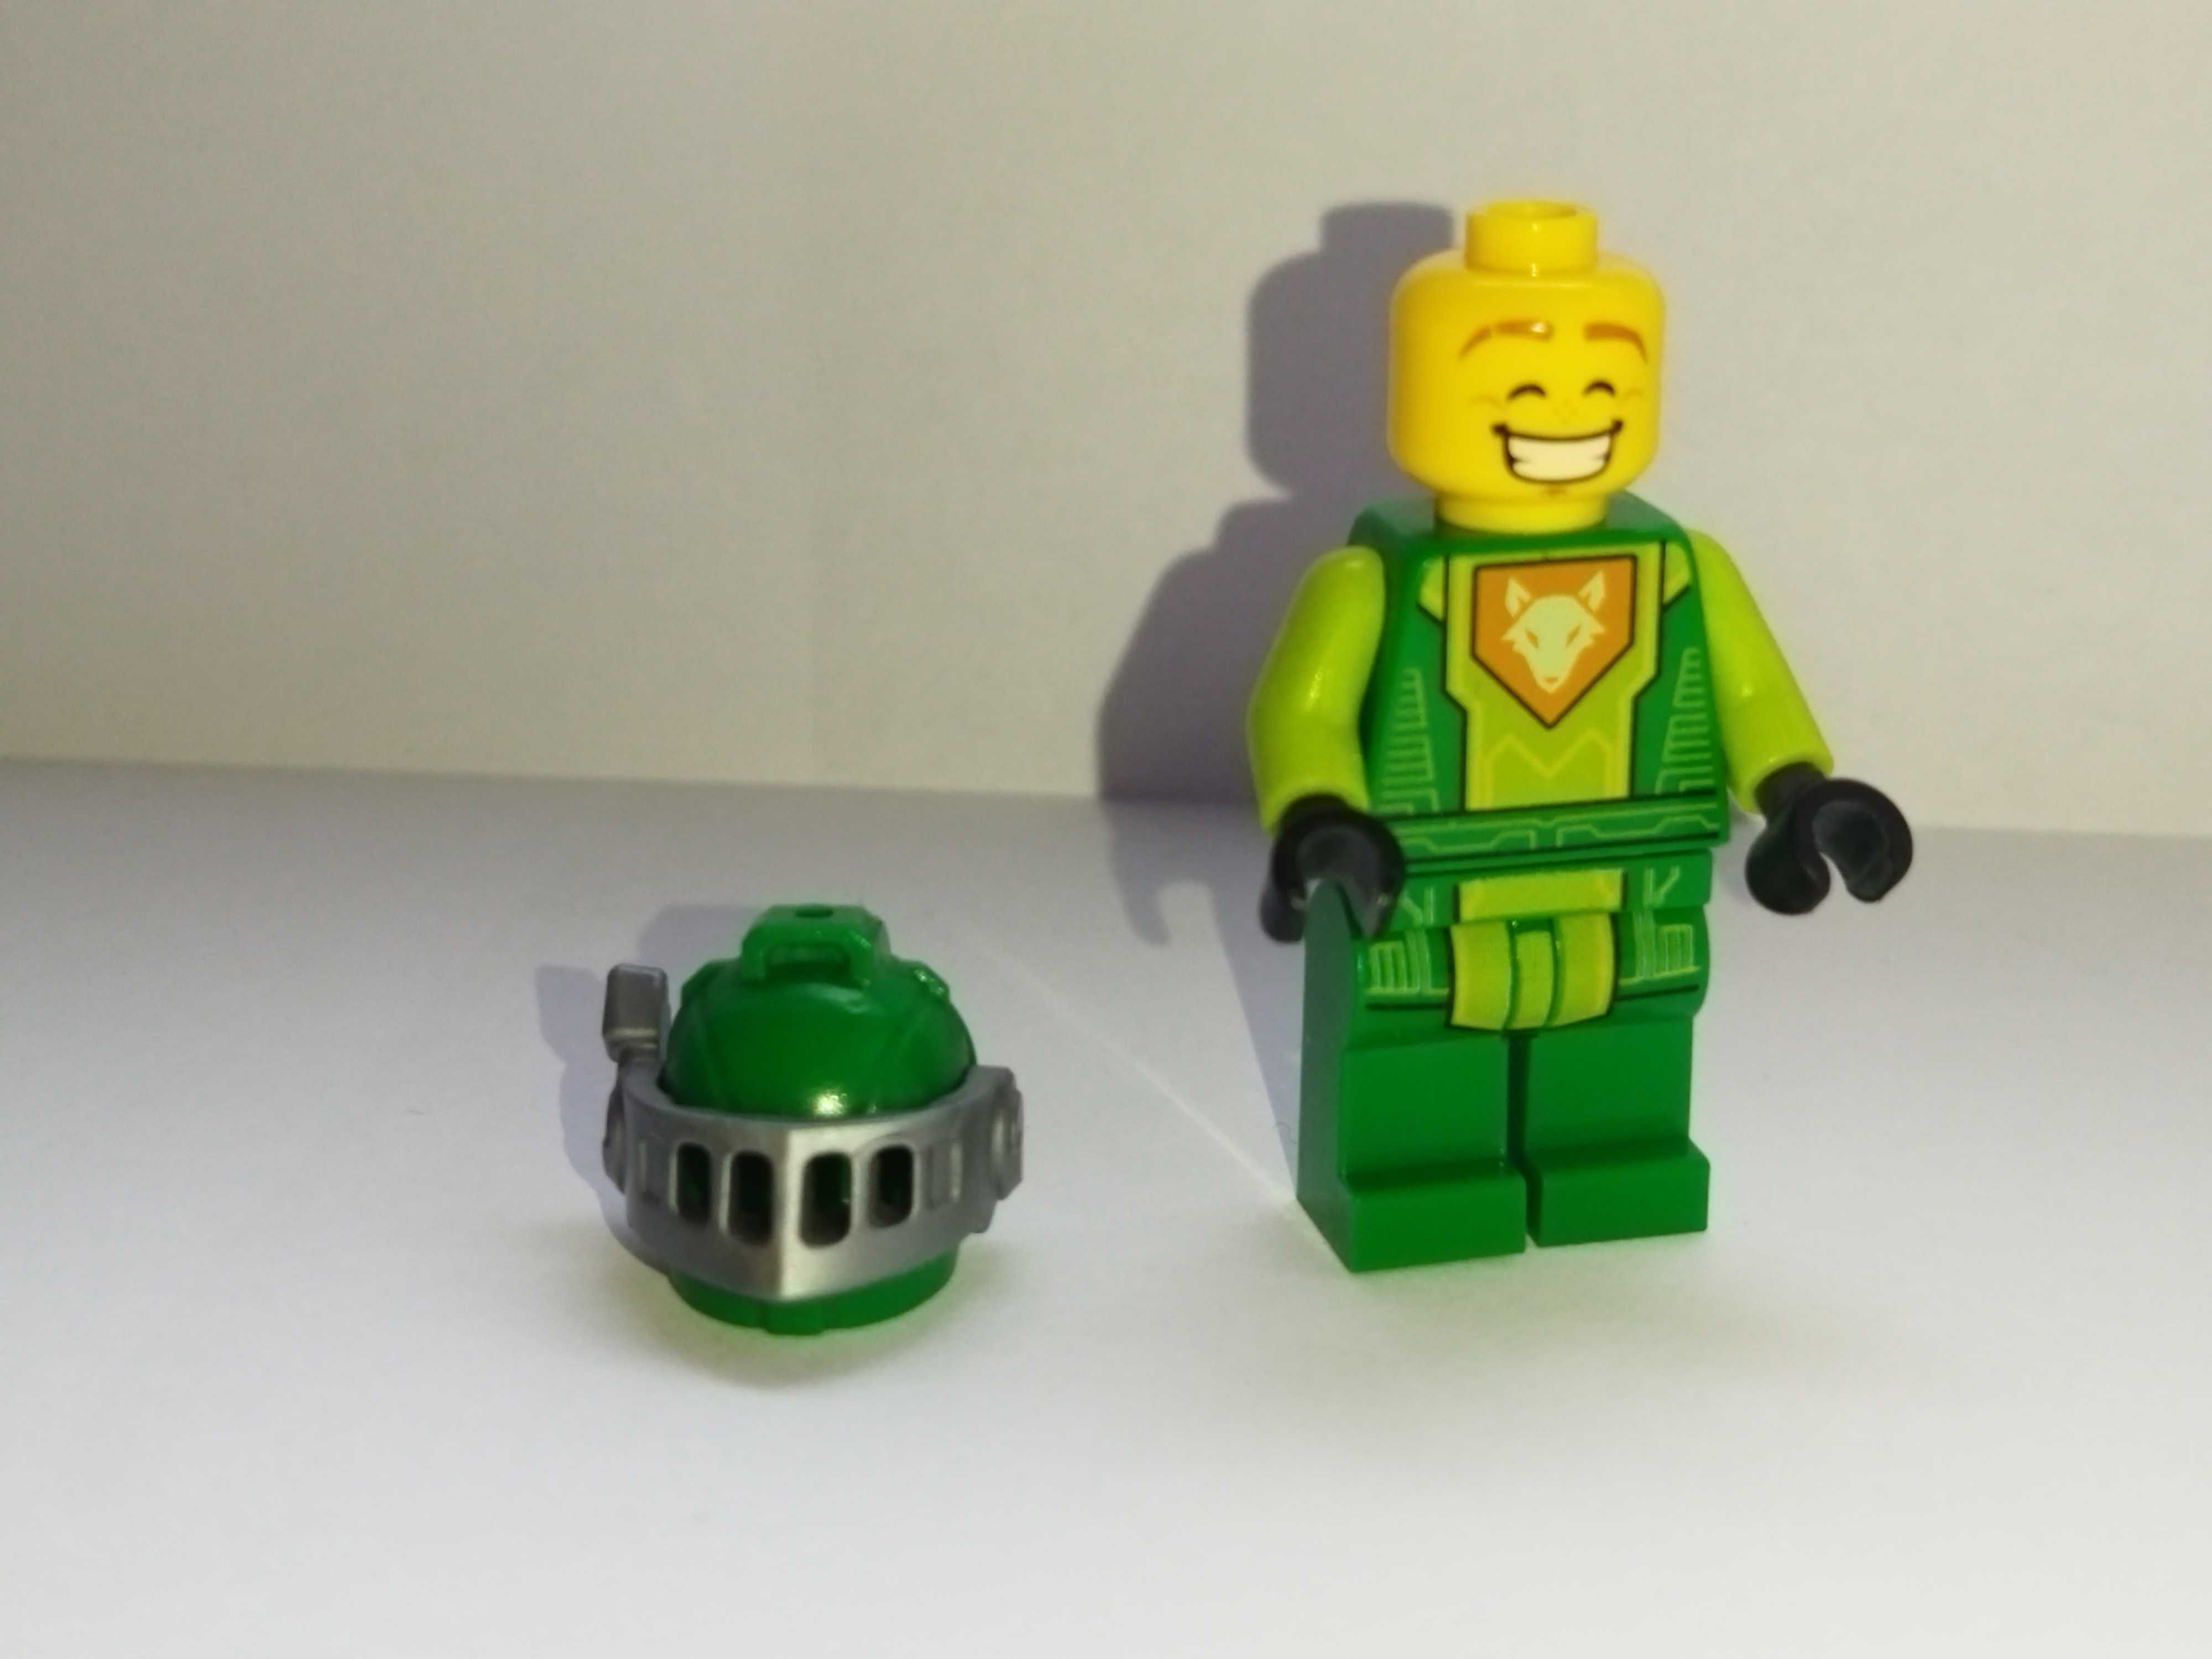 LEGO CHIMA "Battle Suit Aaron" 70364